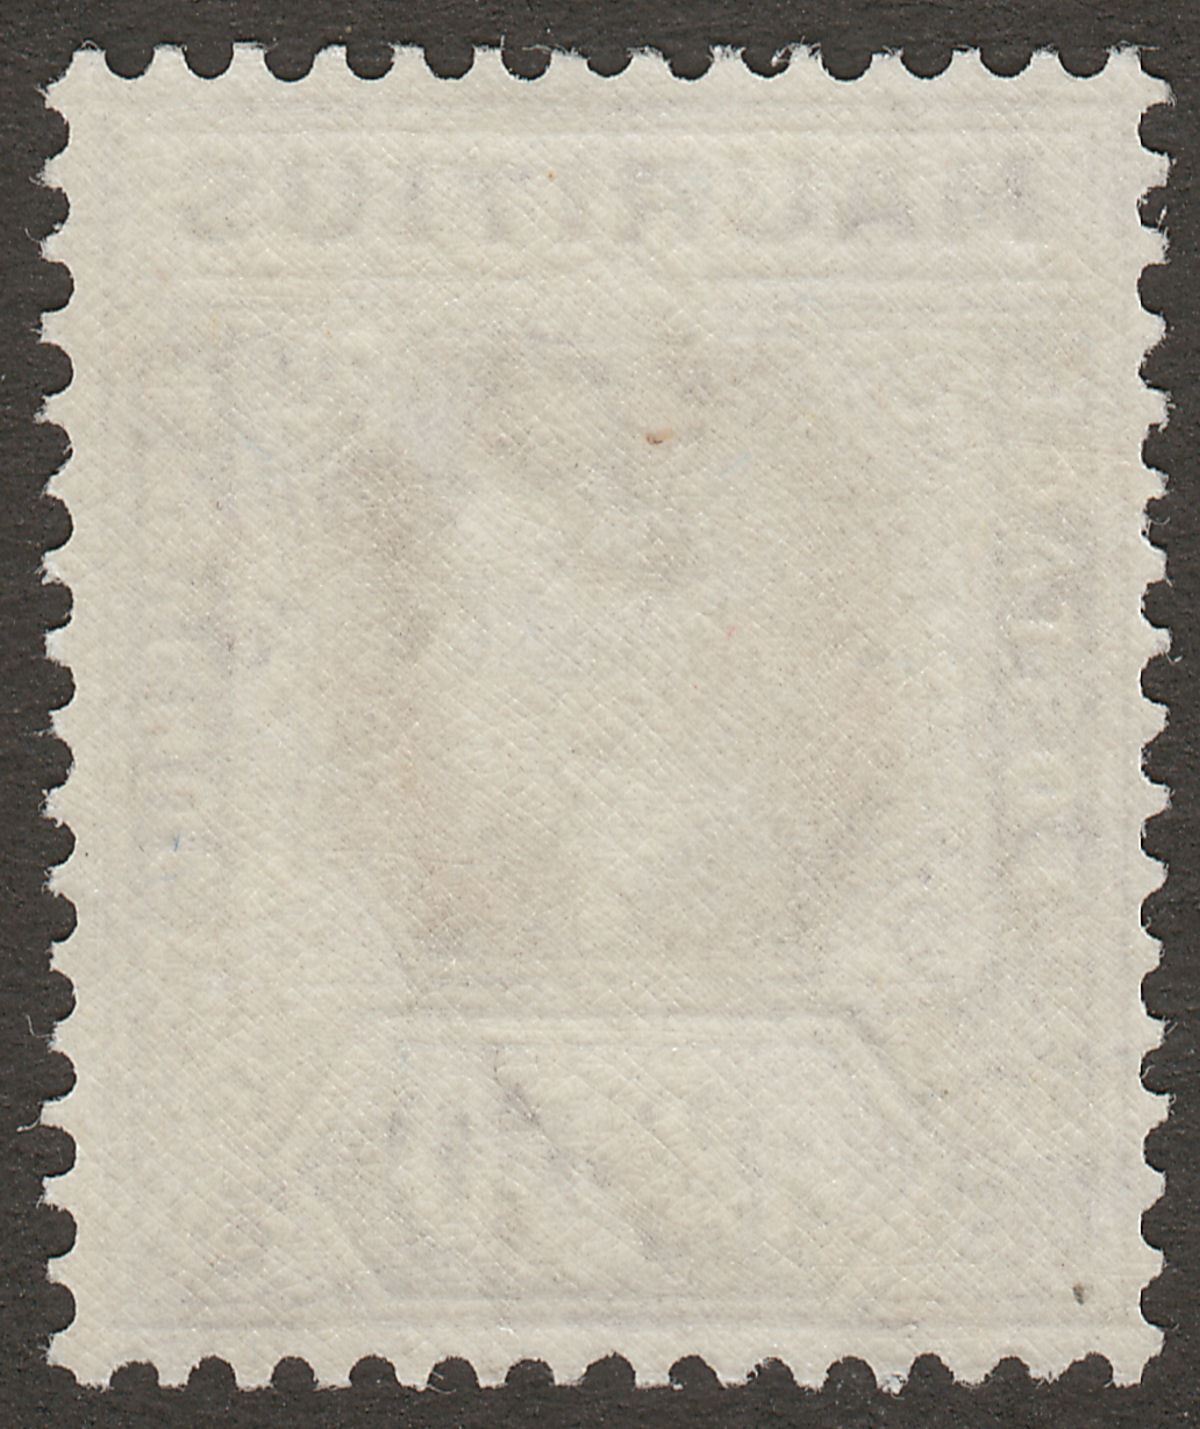 Mauritius 1948 KGVI 2r50c Slate-Violet Chalky Paper Mint SG261c